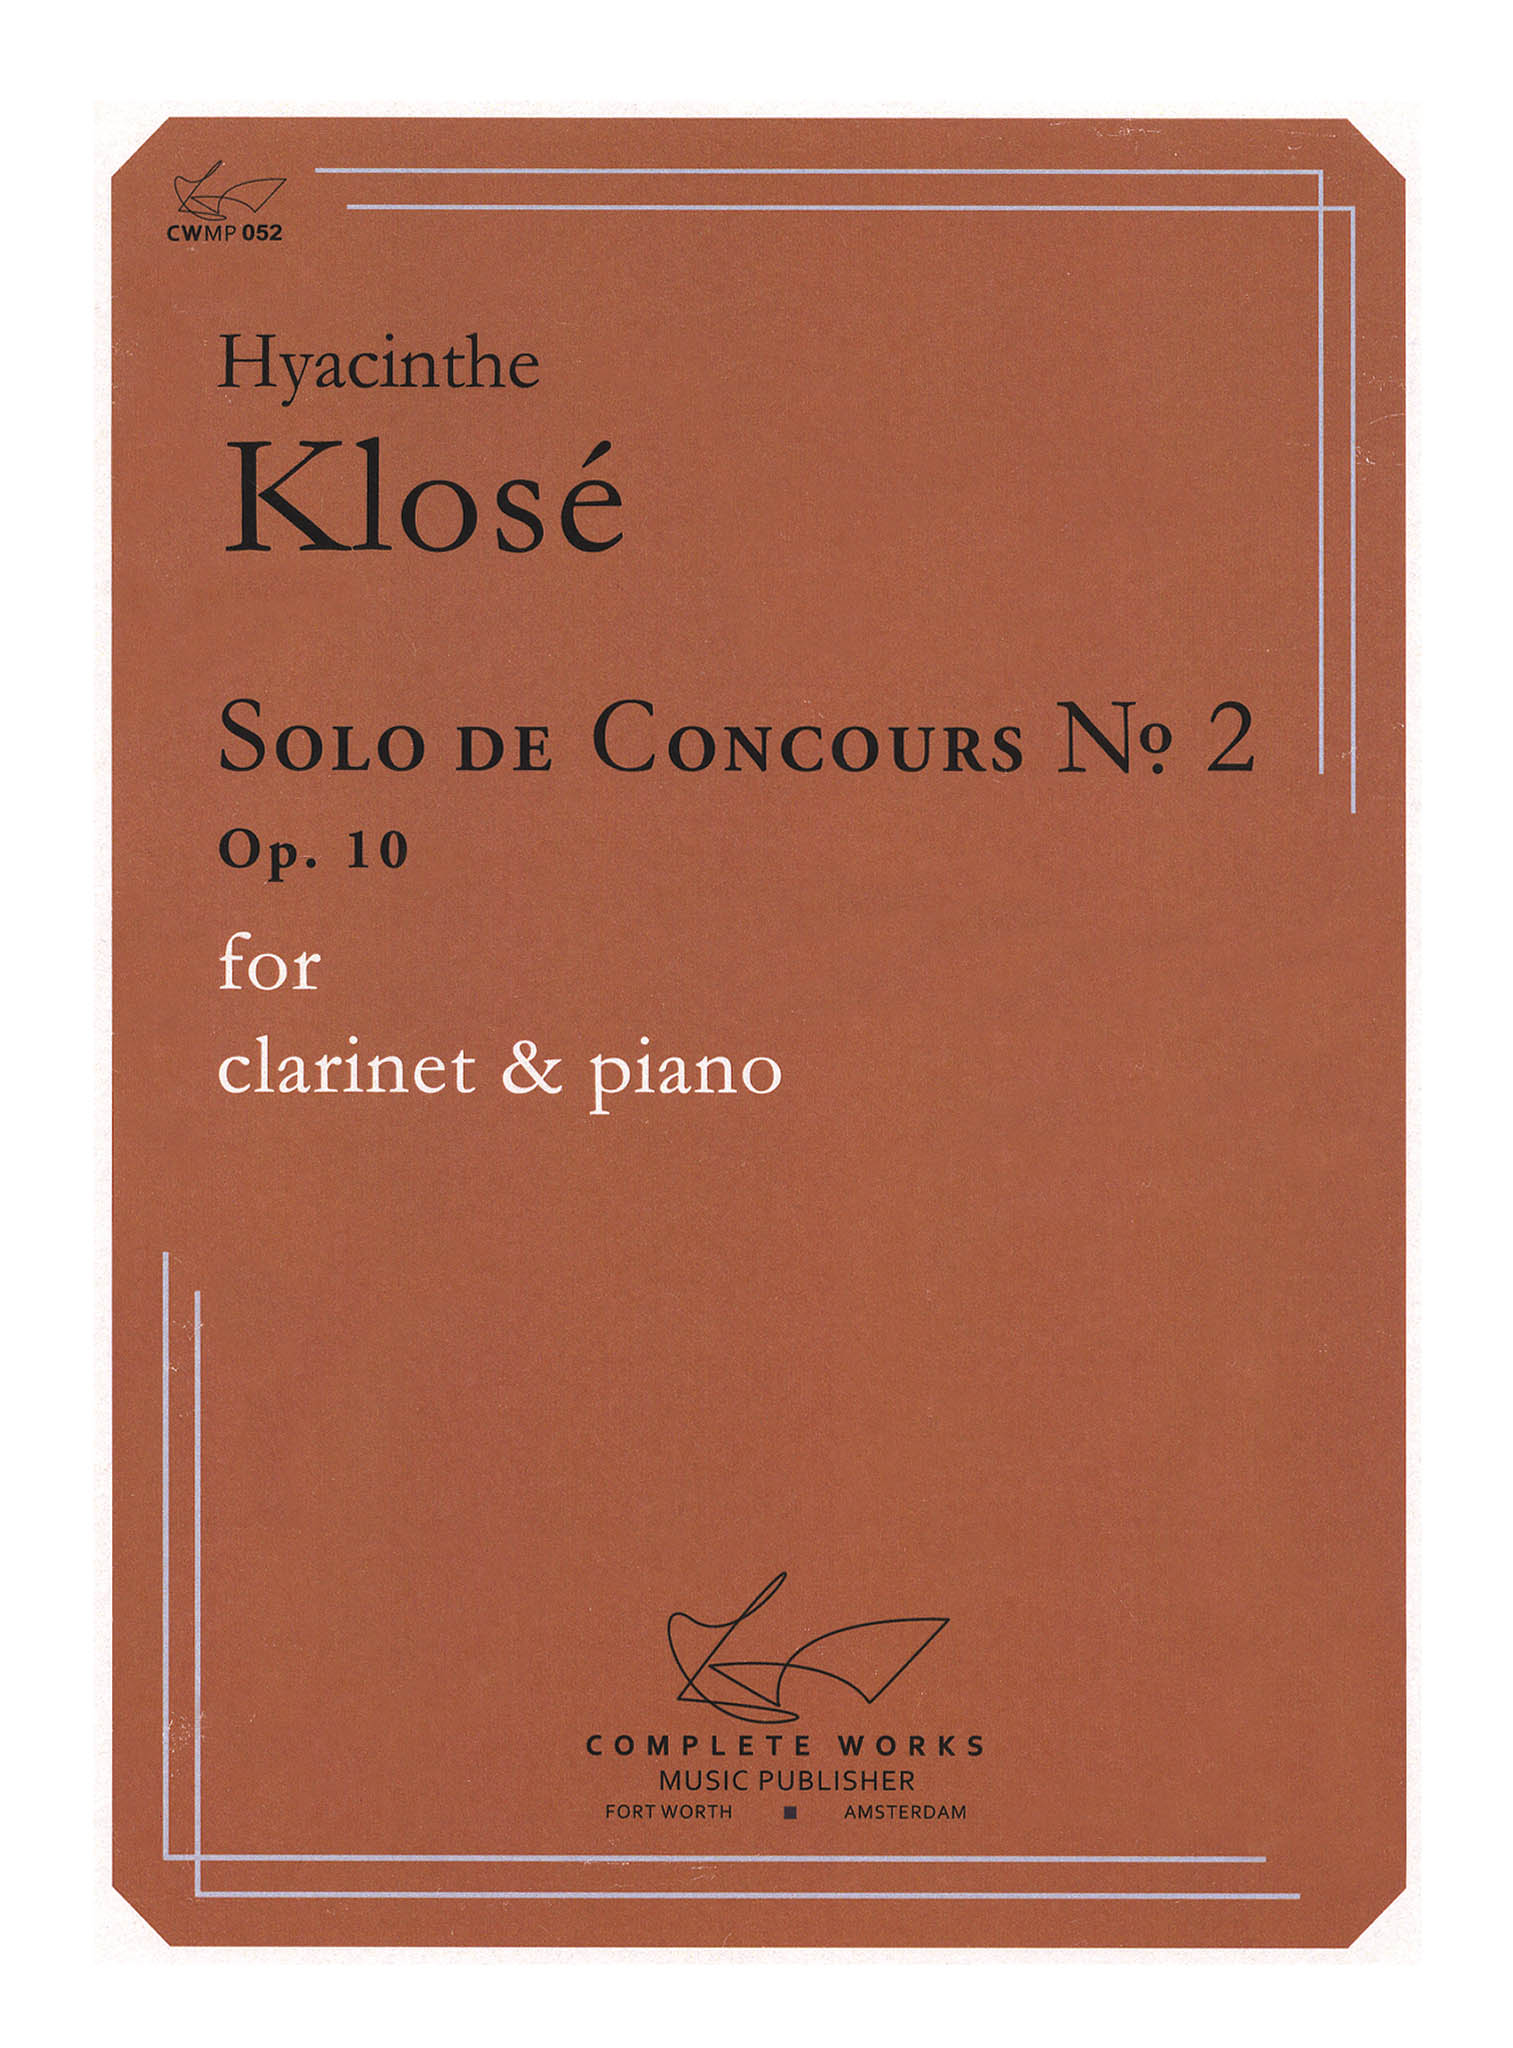 Klosé Solo de concours No. 2, Op. 10 clarinet and piano cover